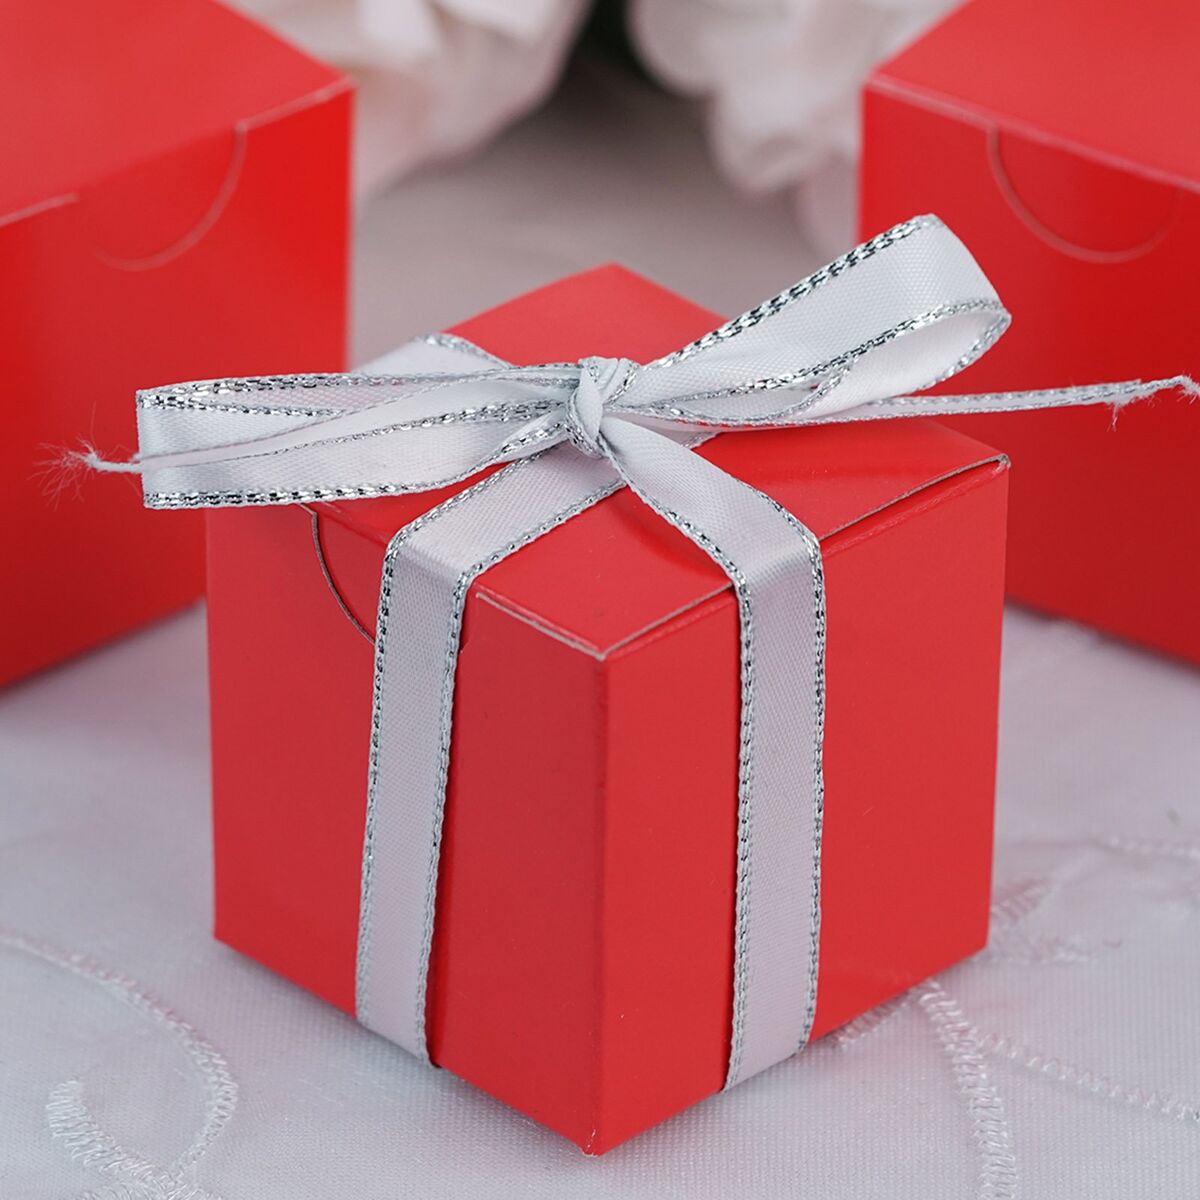 Gift box | The Rooms Ideas Wiki | Fandom